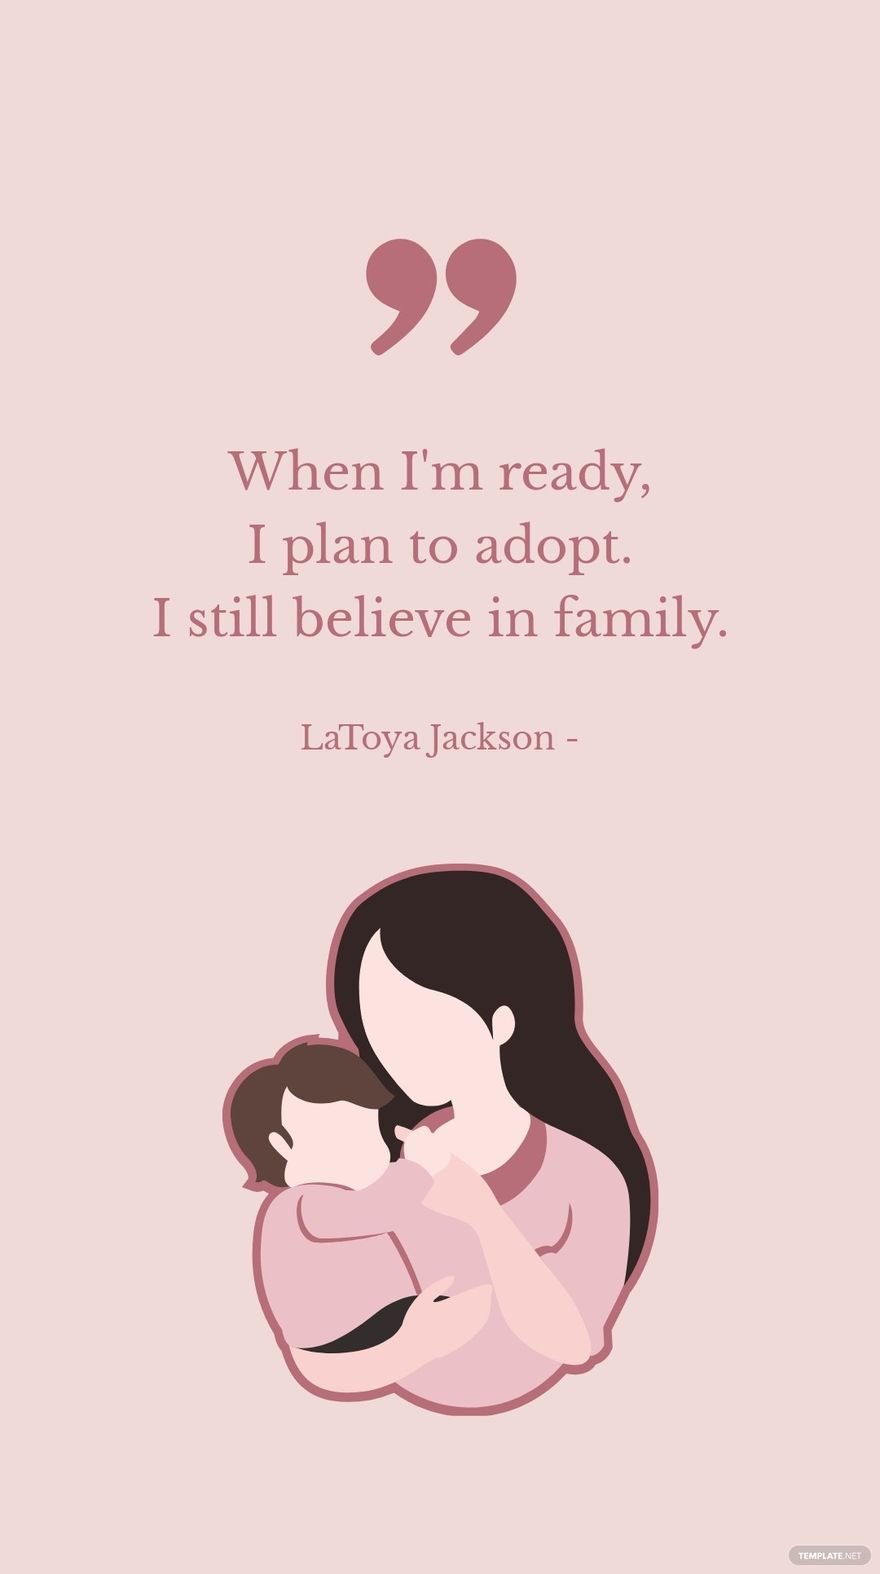 Free LaToya Jackson - When I'm ready, I plan to adopt. I still believe in family. in JPG